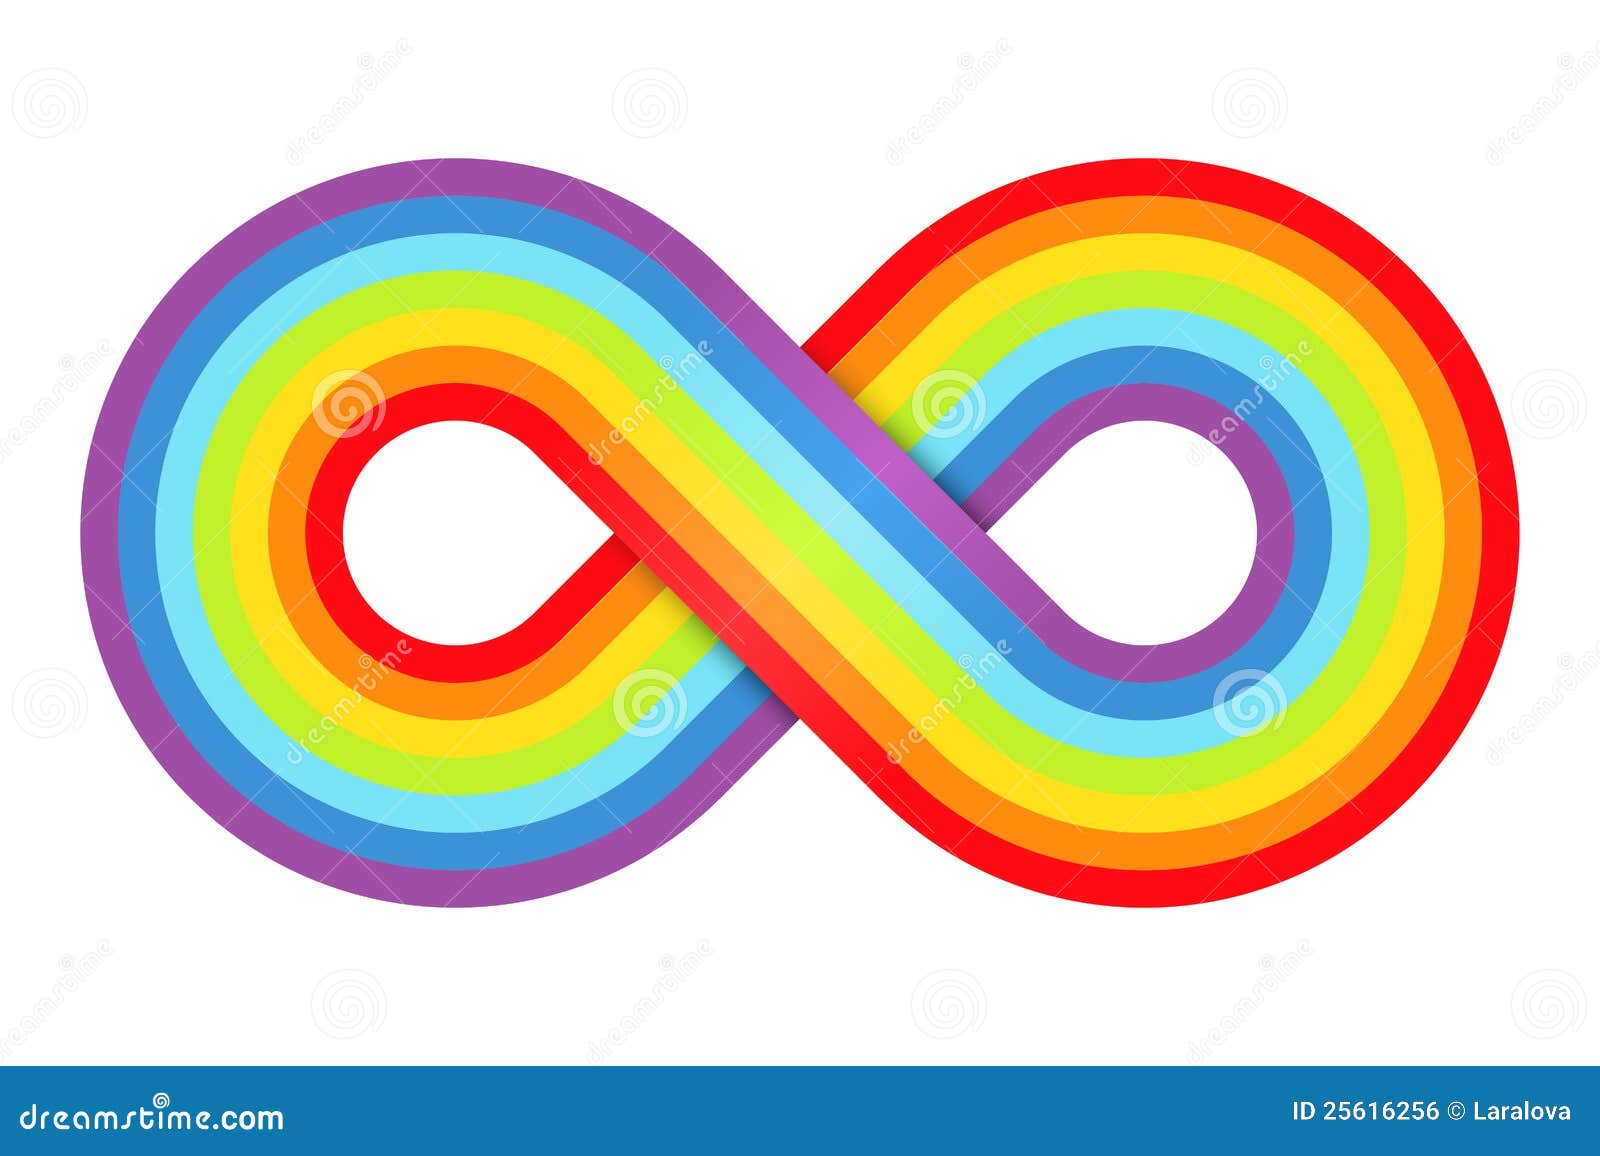 abstract rainbow infinity